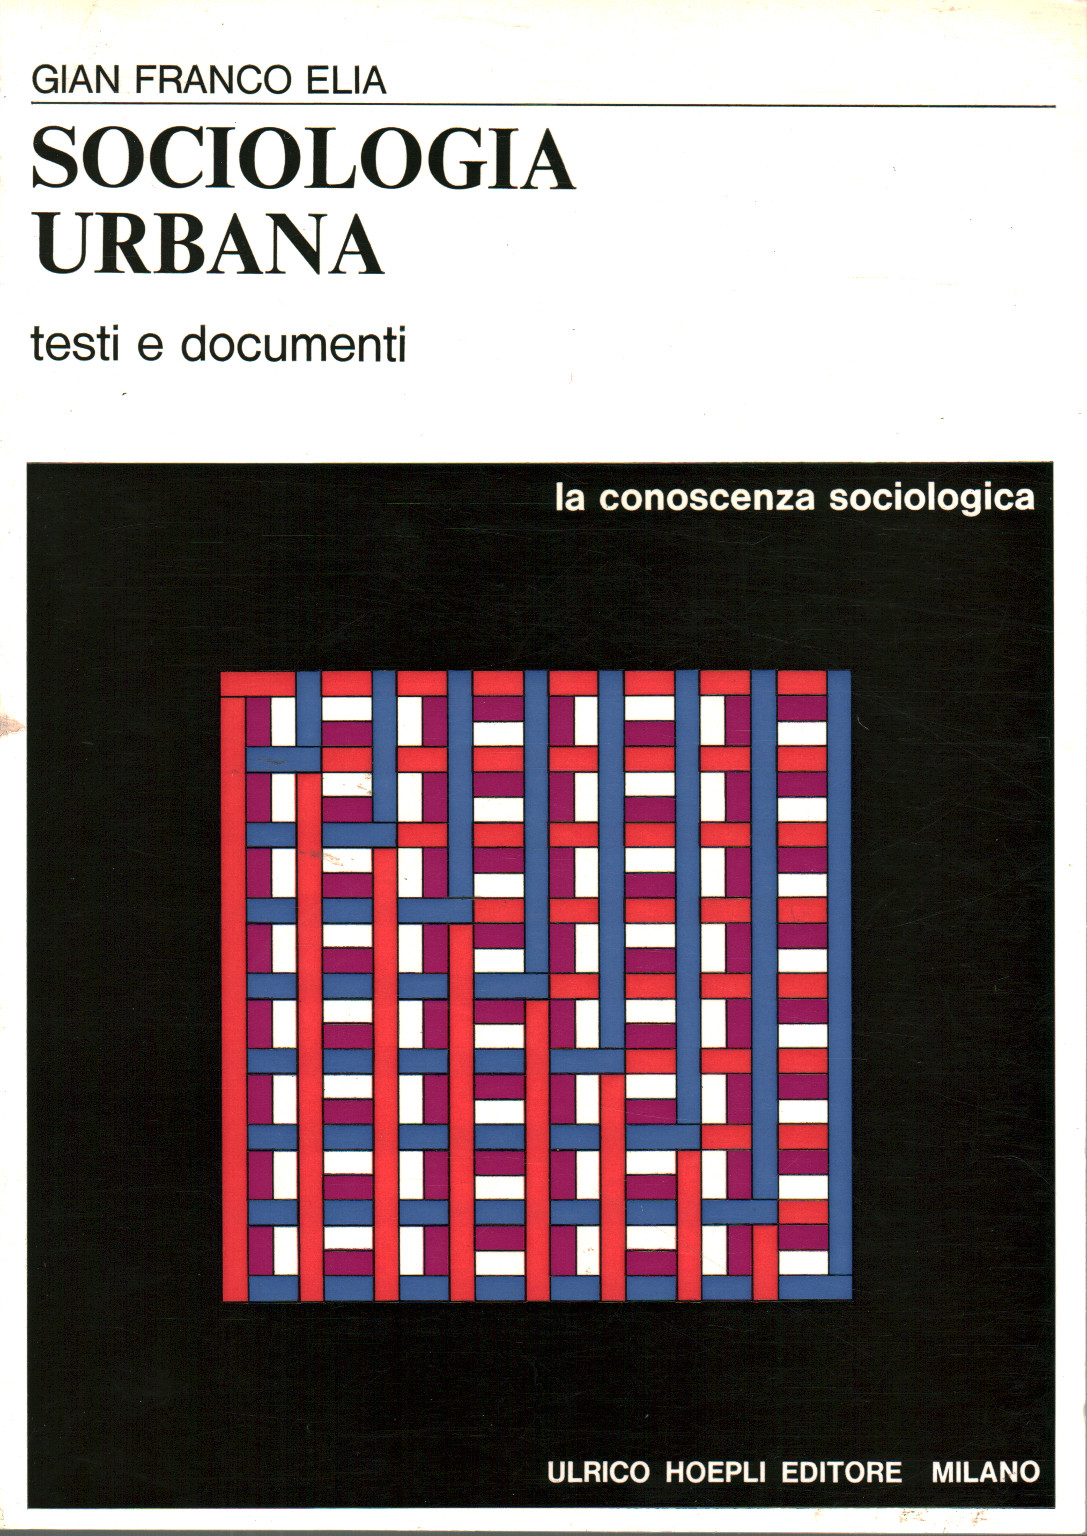 Sociologia urbana, Gian Franco Elia